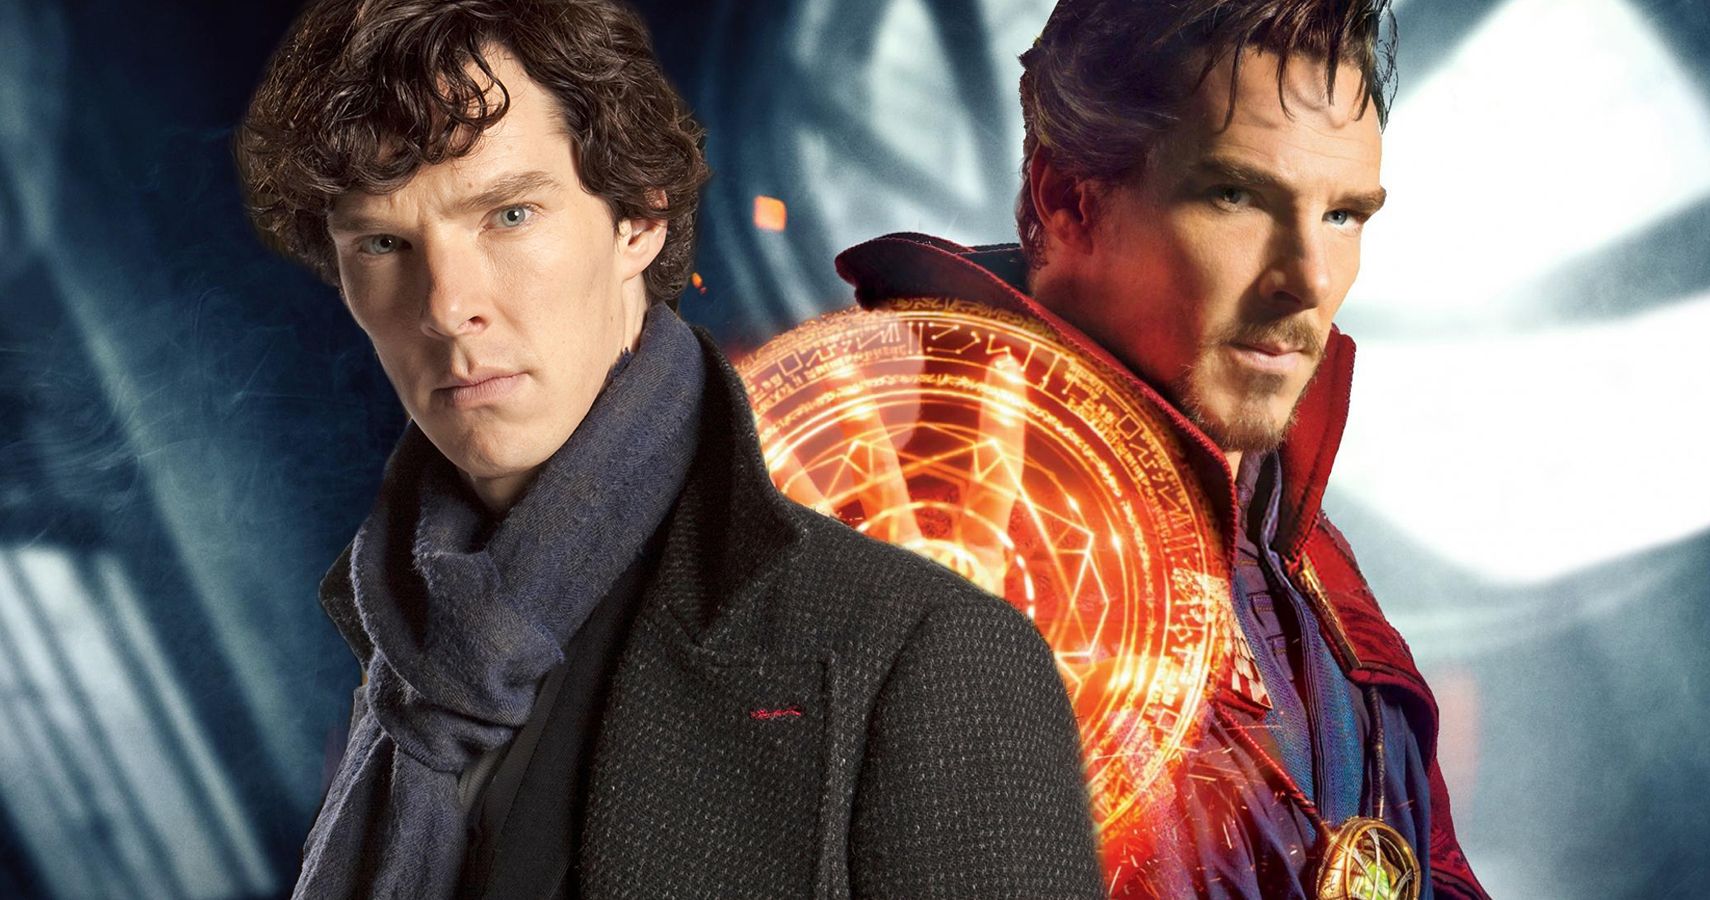 Benedict Cumberbatch comparison between Sherlock and Doctor Strange